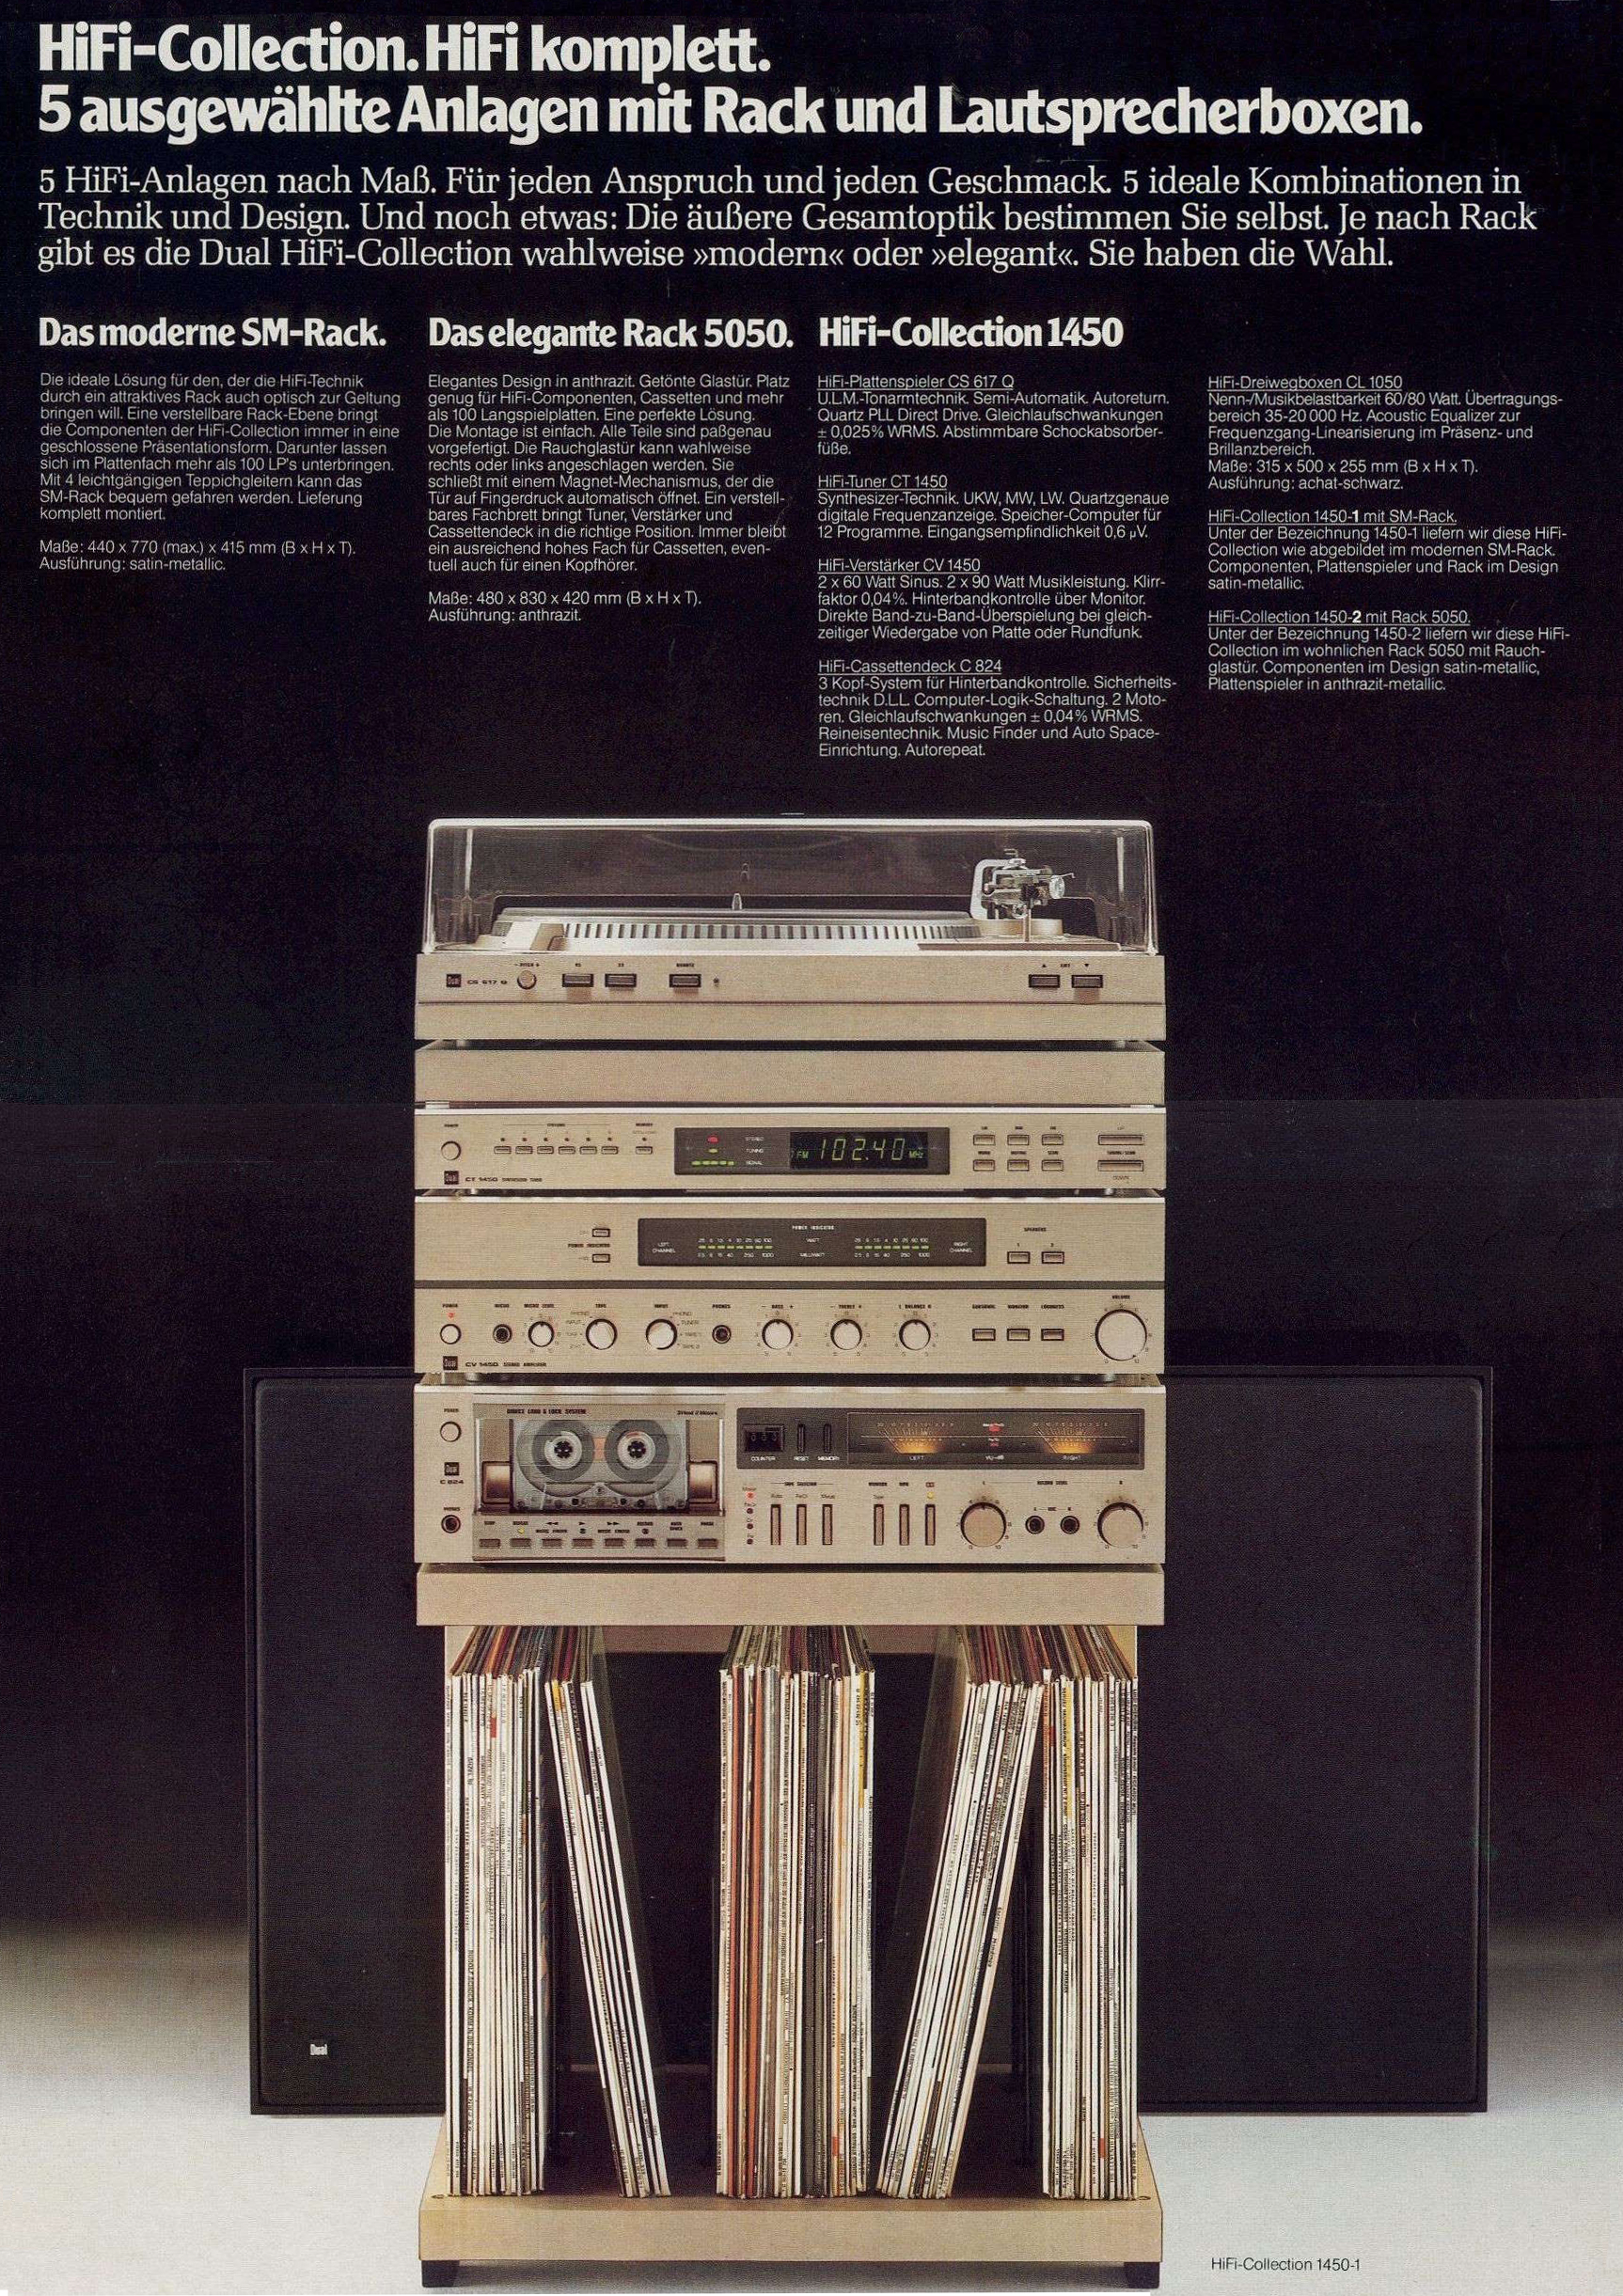 Dual Collection 1450-Prospekt-1981.jpg